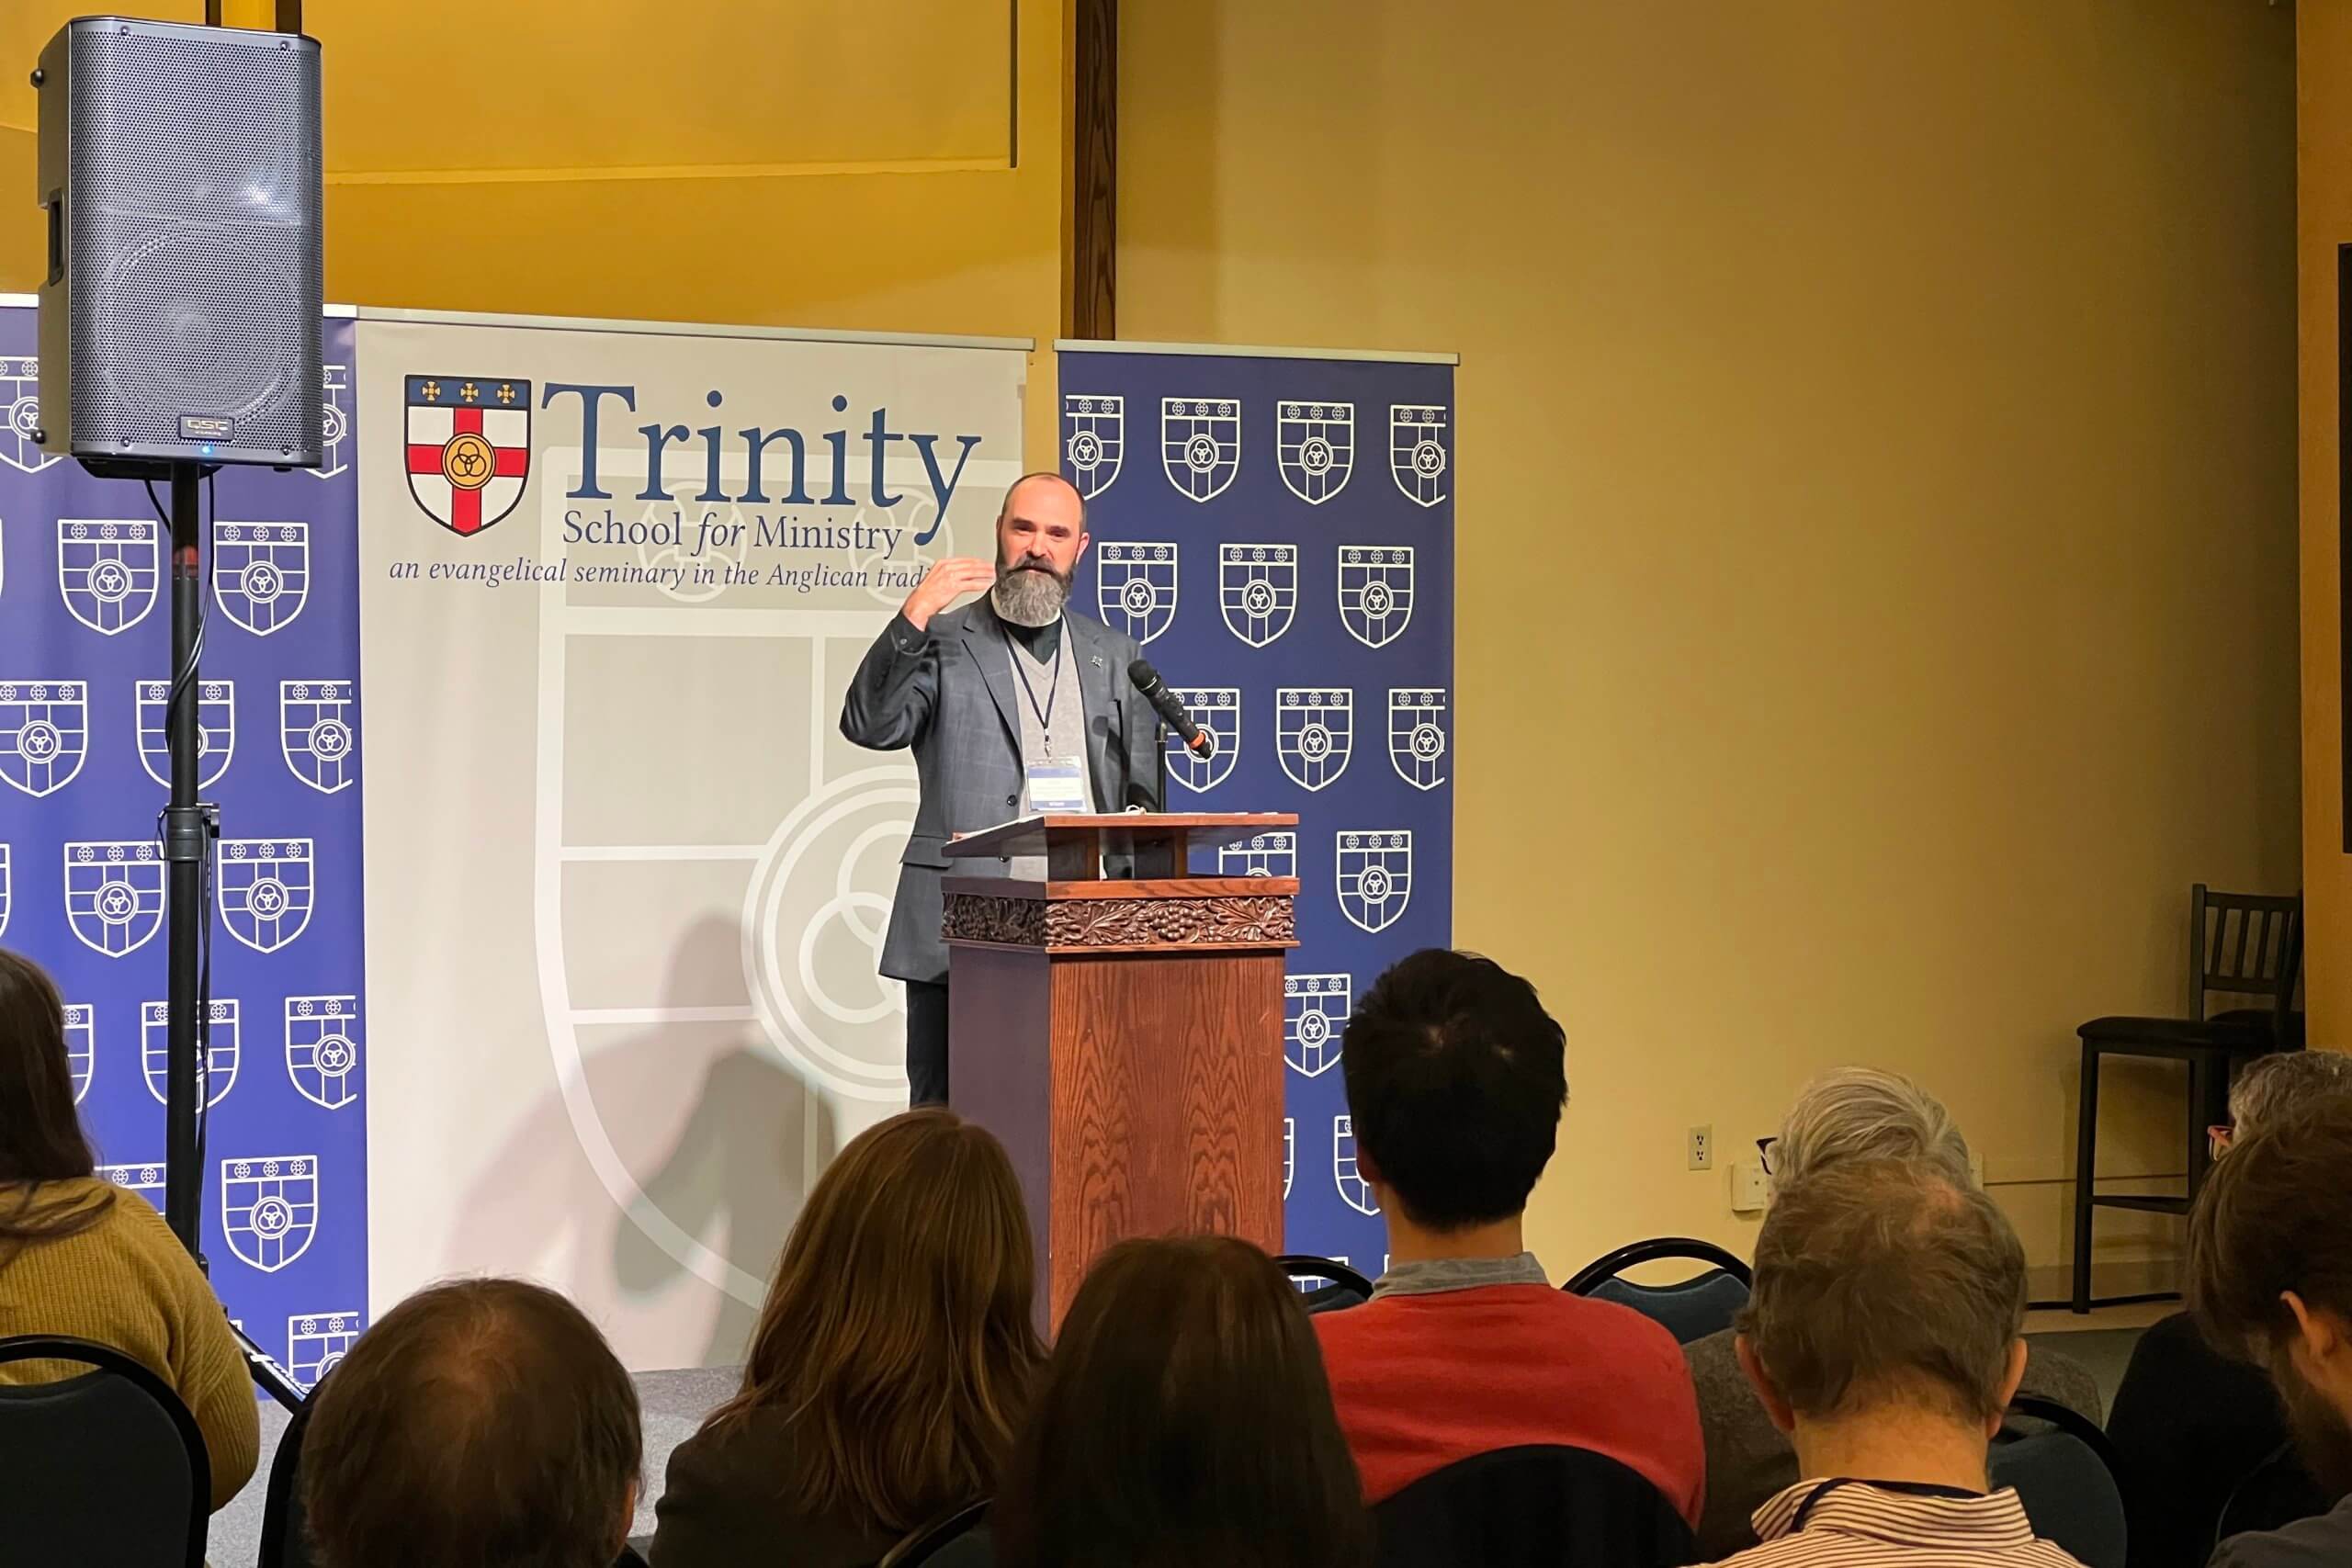 Canon Mark Speaks at Trinity School for Ministry’s Revitalization Seminar